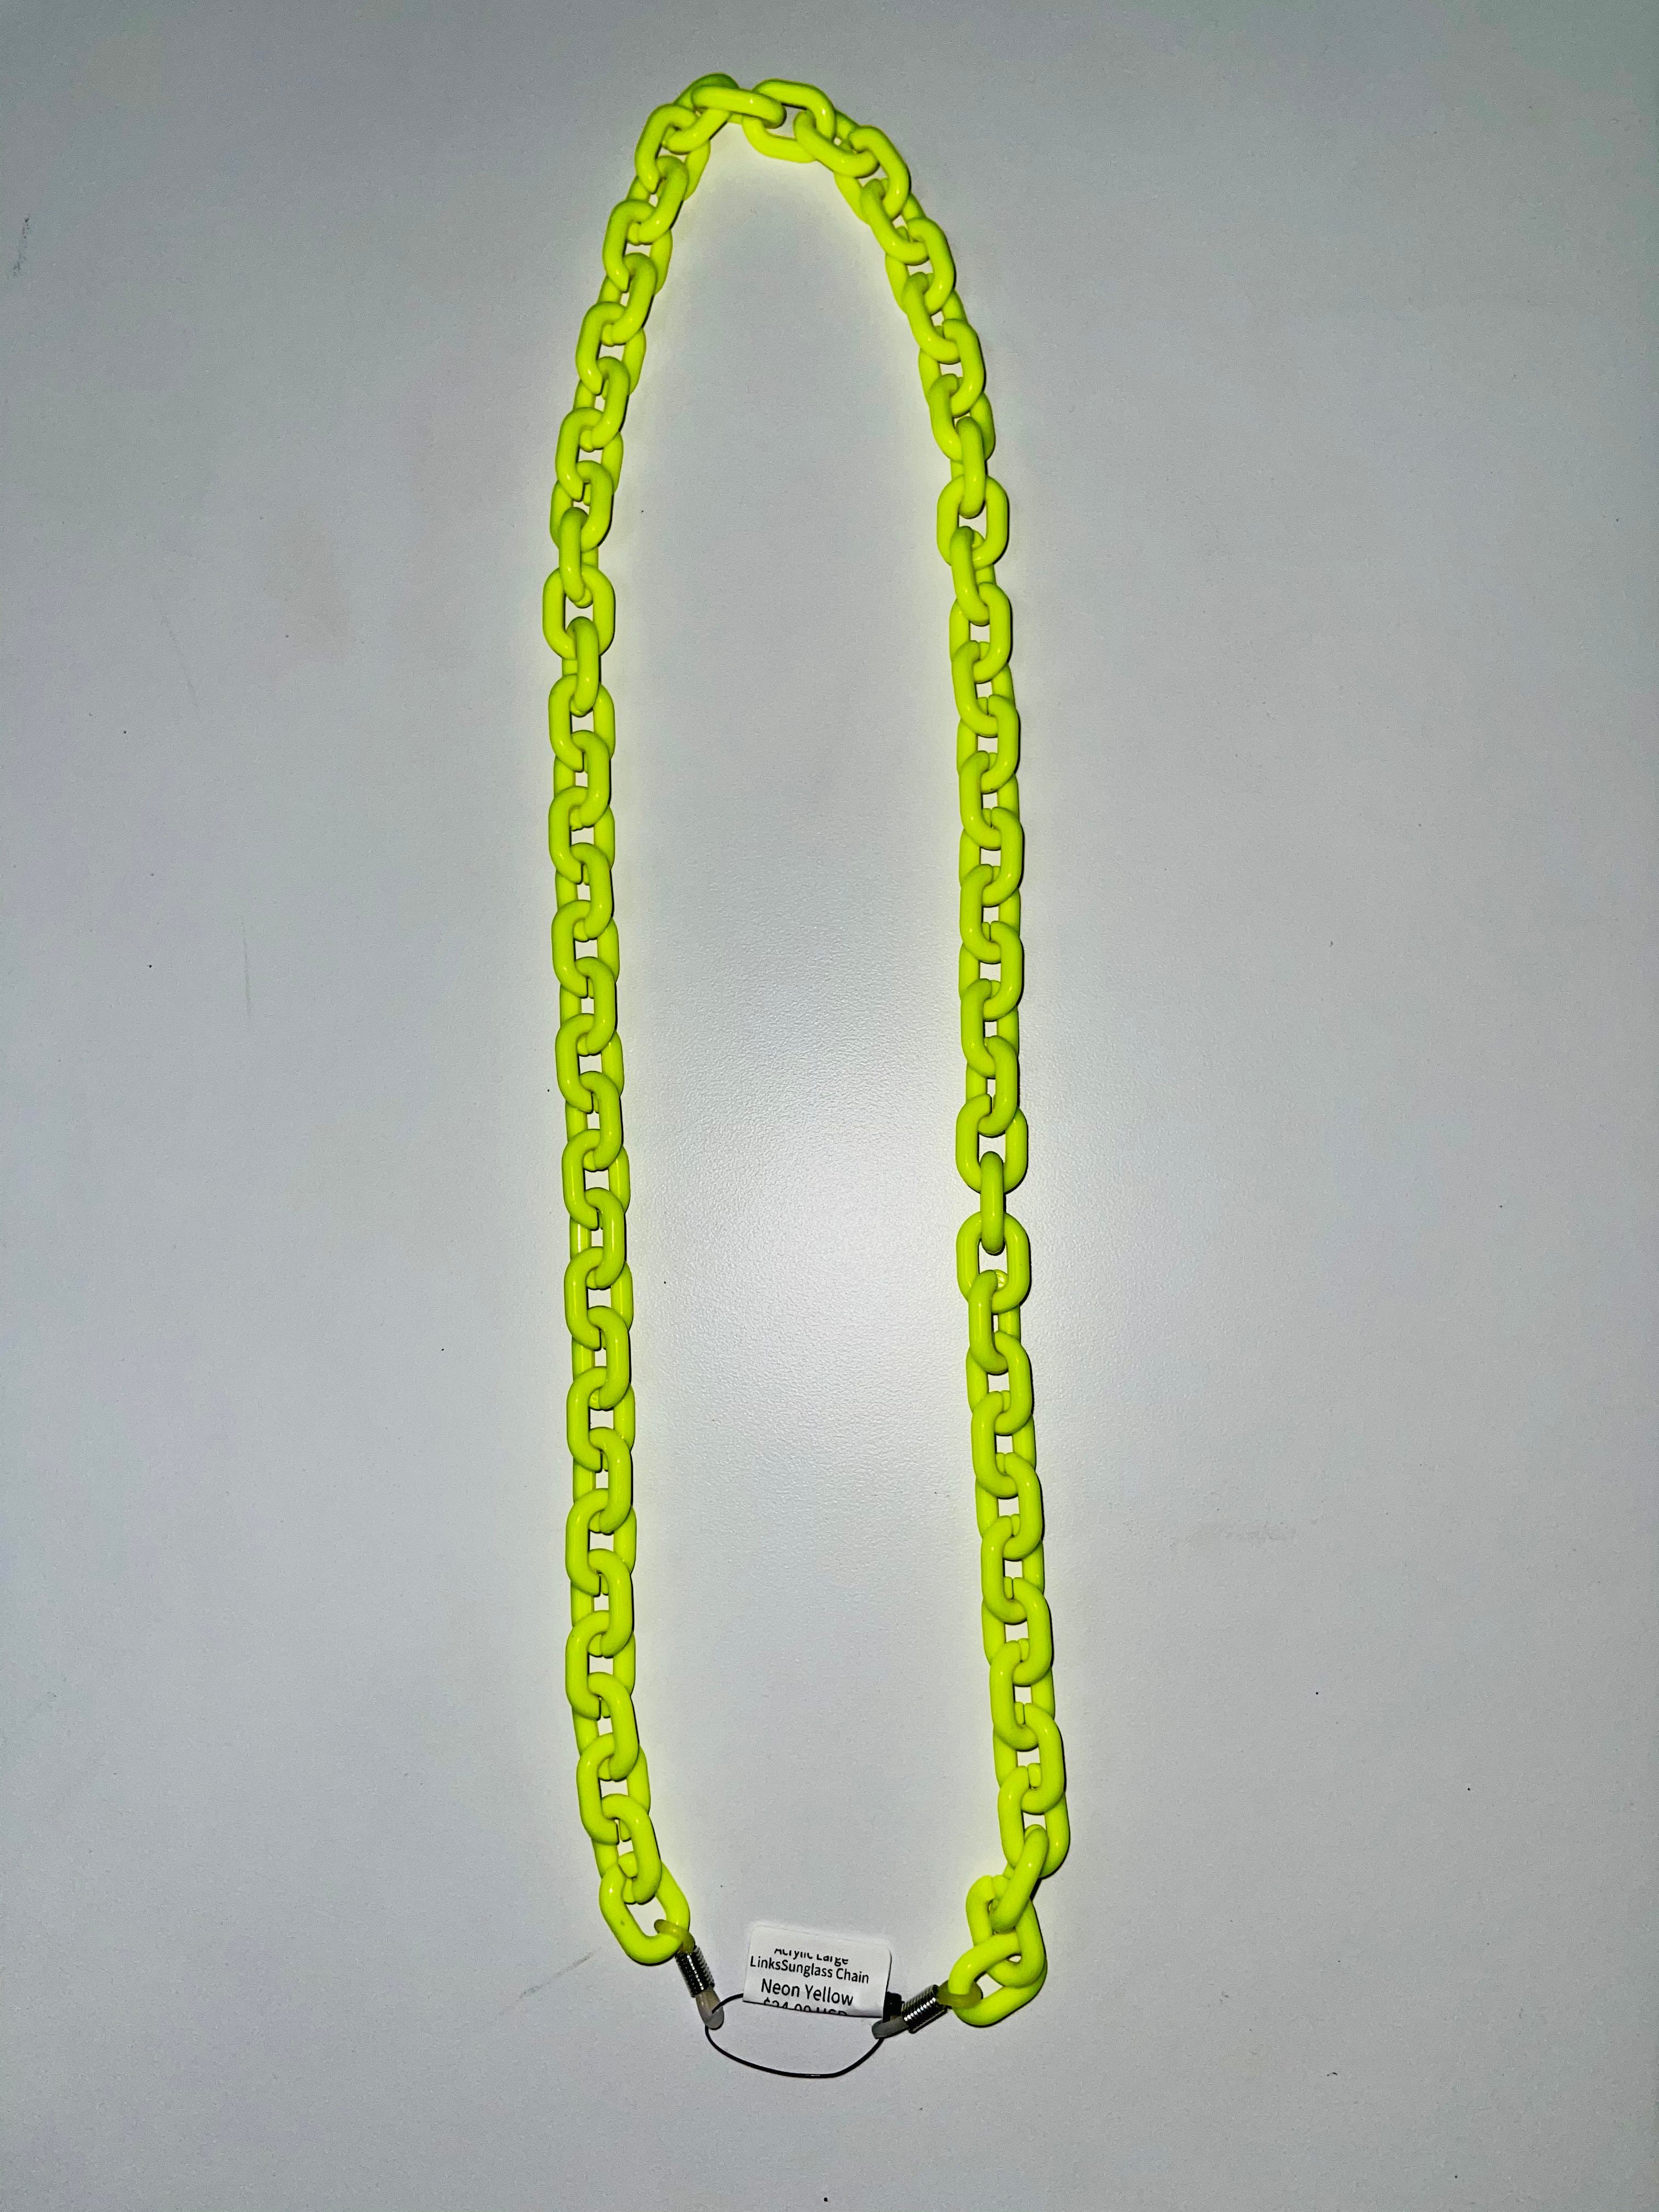 Acrylic Large LinksSunglass Chain